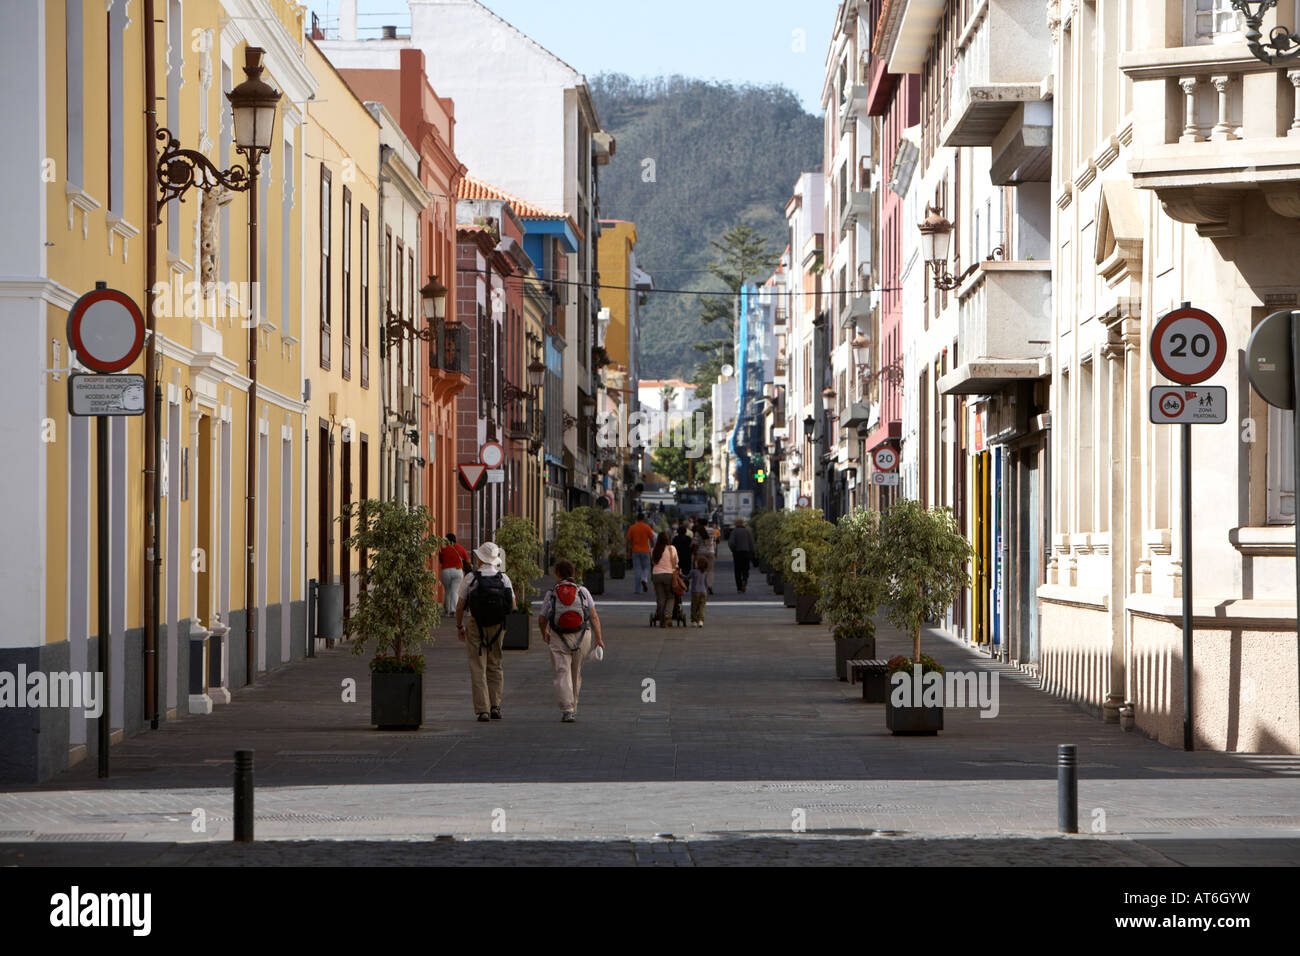 La unesco conserva estrecha calle peatonal en la Laguna, Tenerife, Islas Canarias Foto de stock